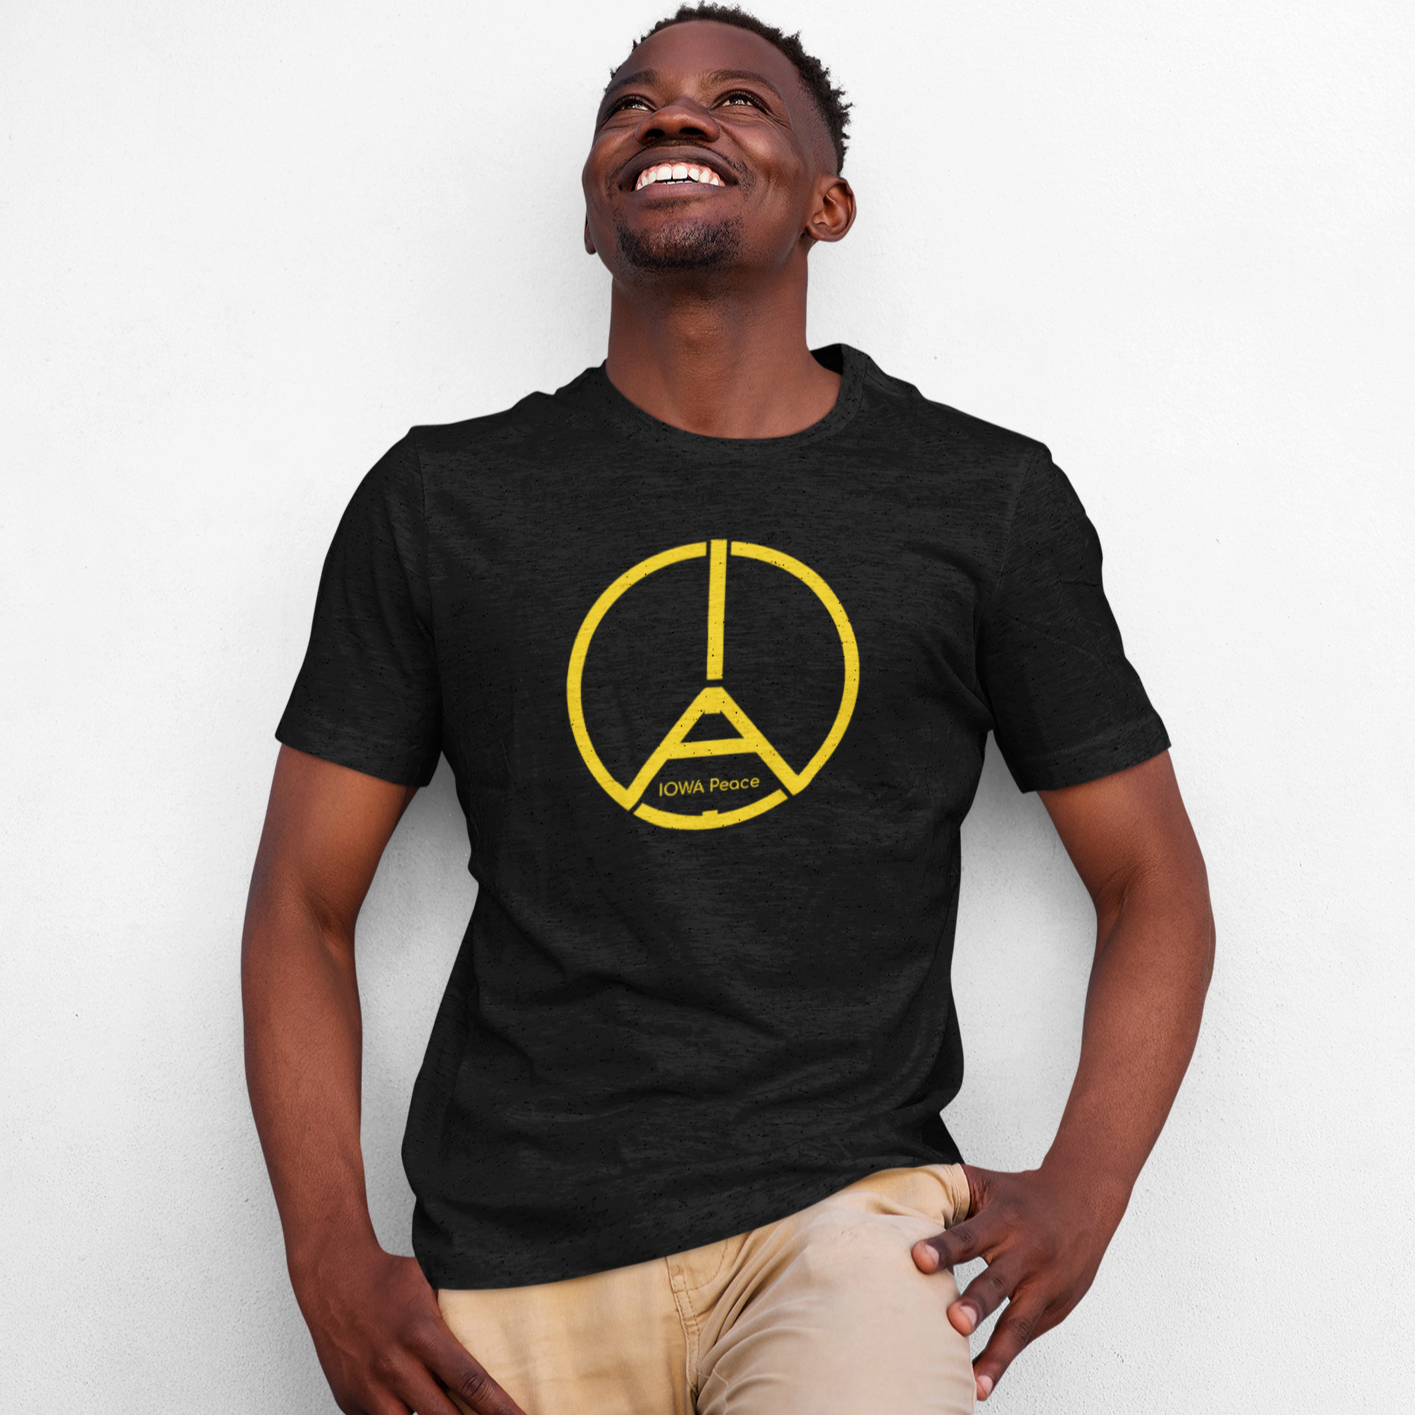 "IOWA Peace" Symbol T-Shirt Black & Gold